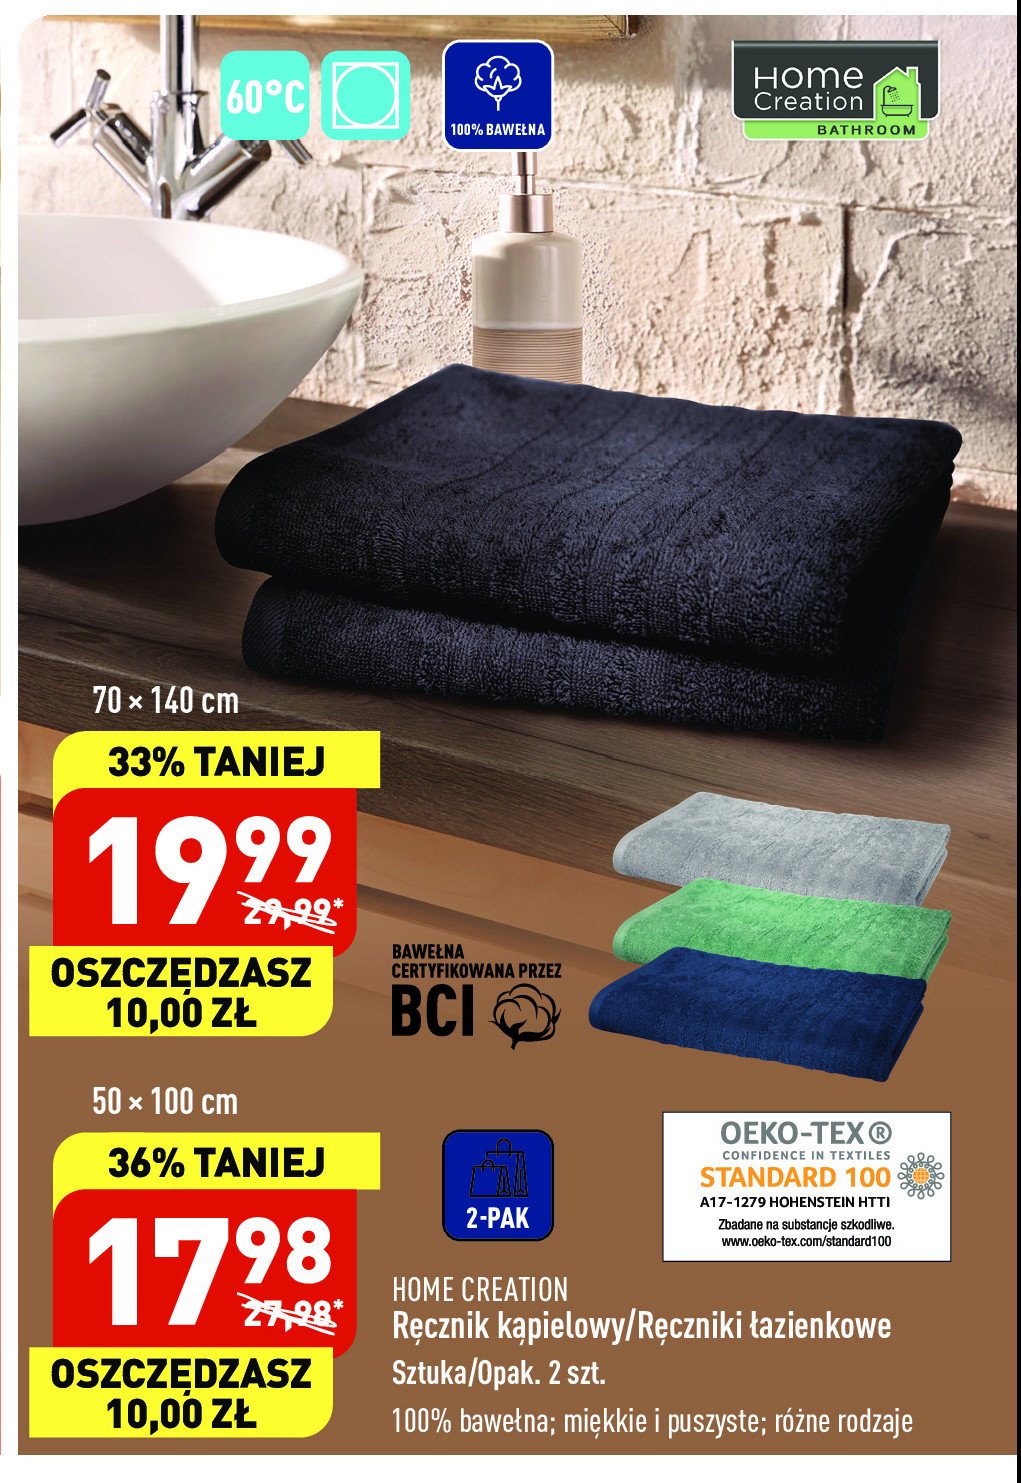 Ręczniki frotte 50 x 100 cm Home creation promocja